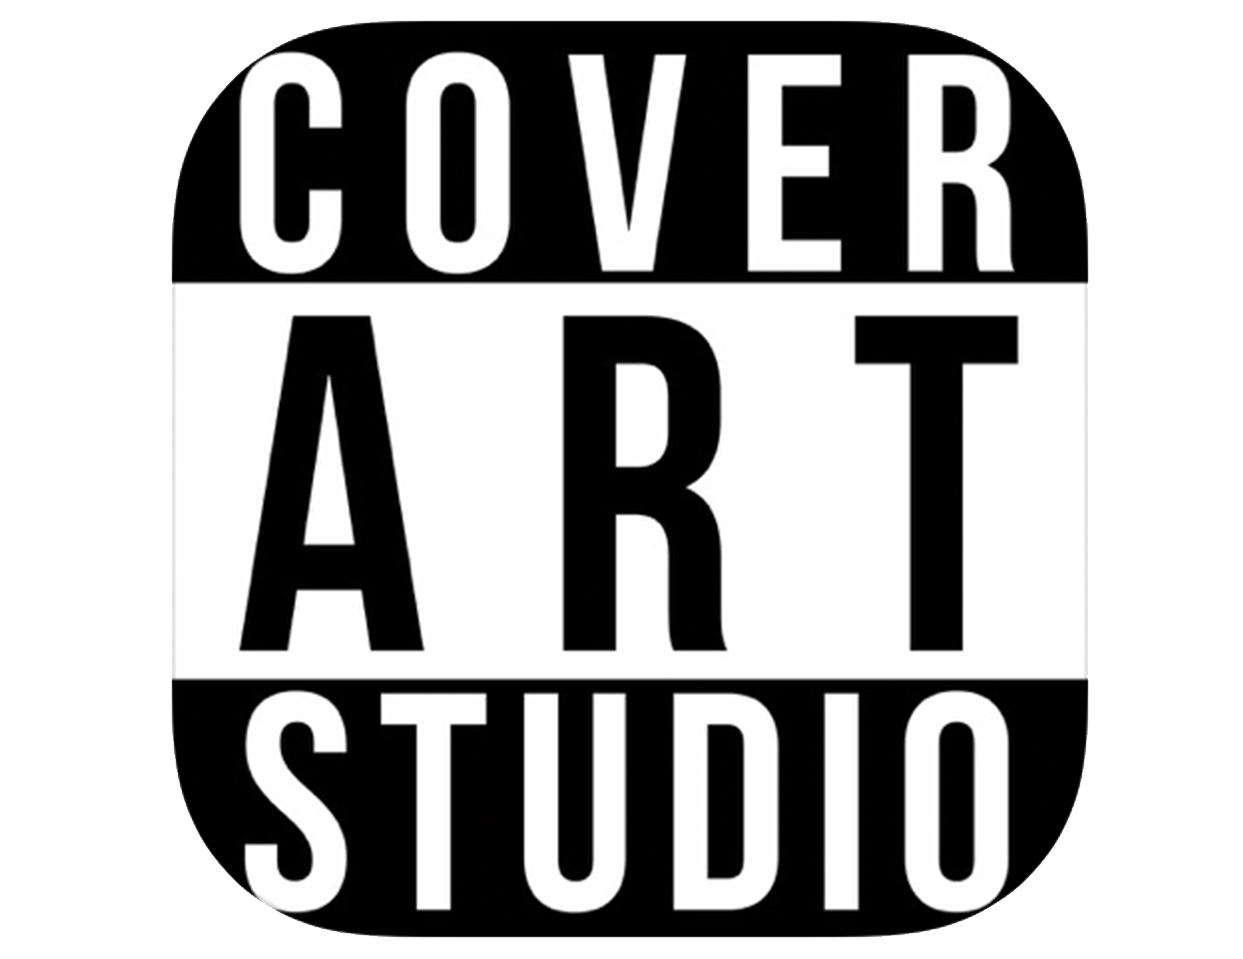 Cover Art Studio